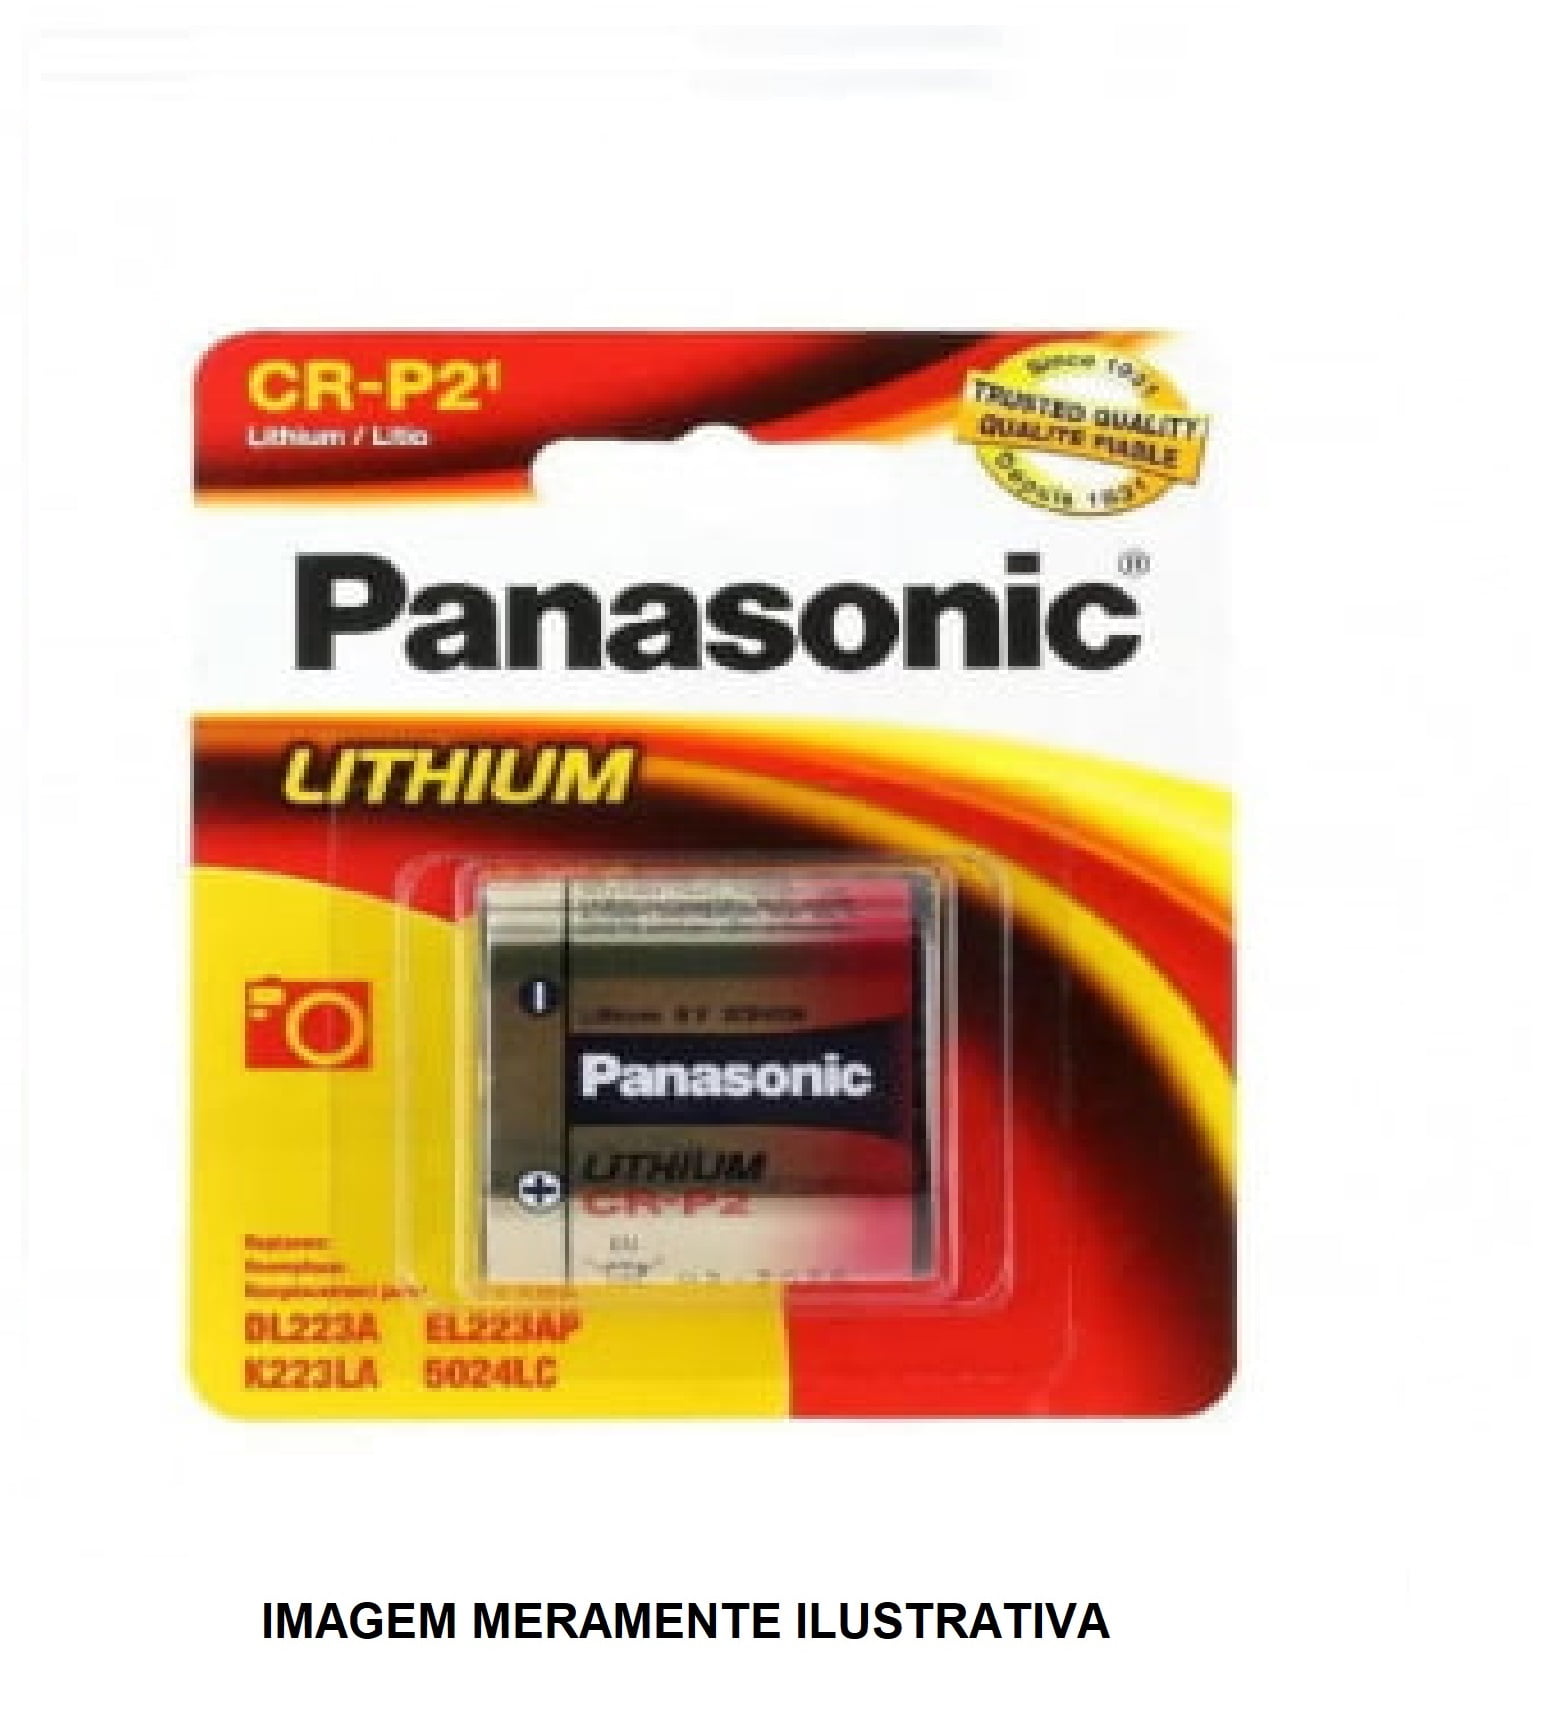 223 CR-P2 6V Lithium PANASONIC / 1 Bateria